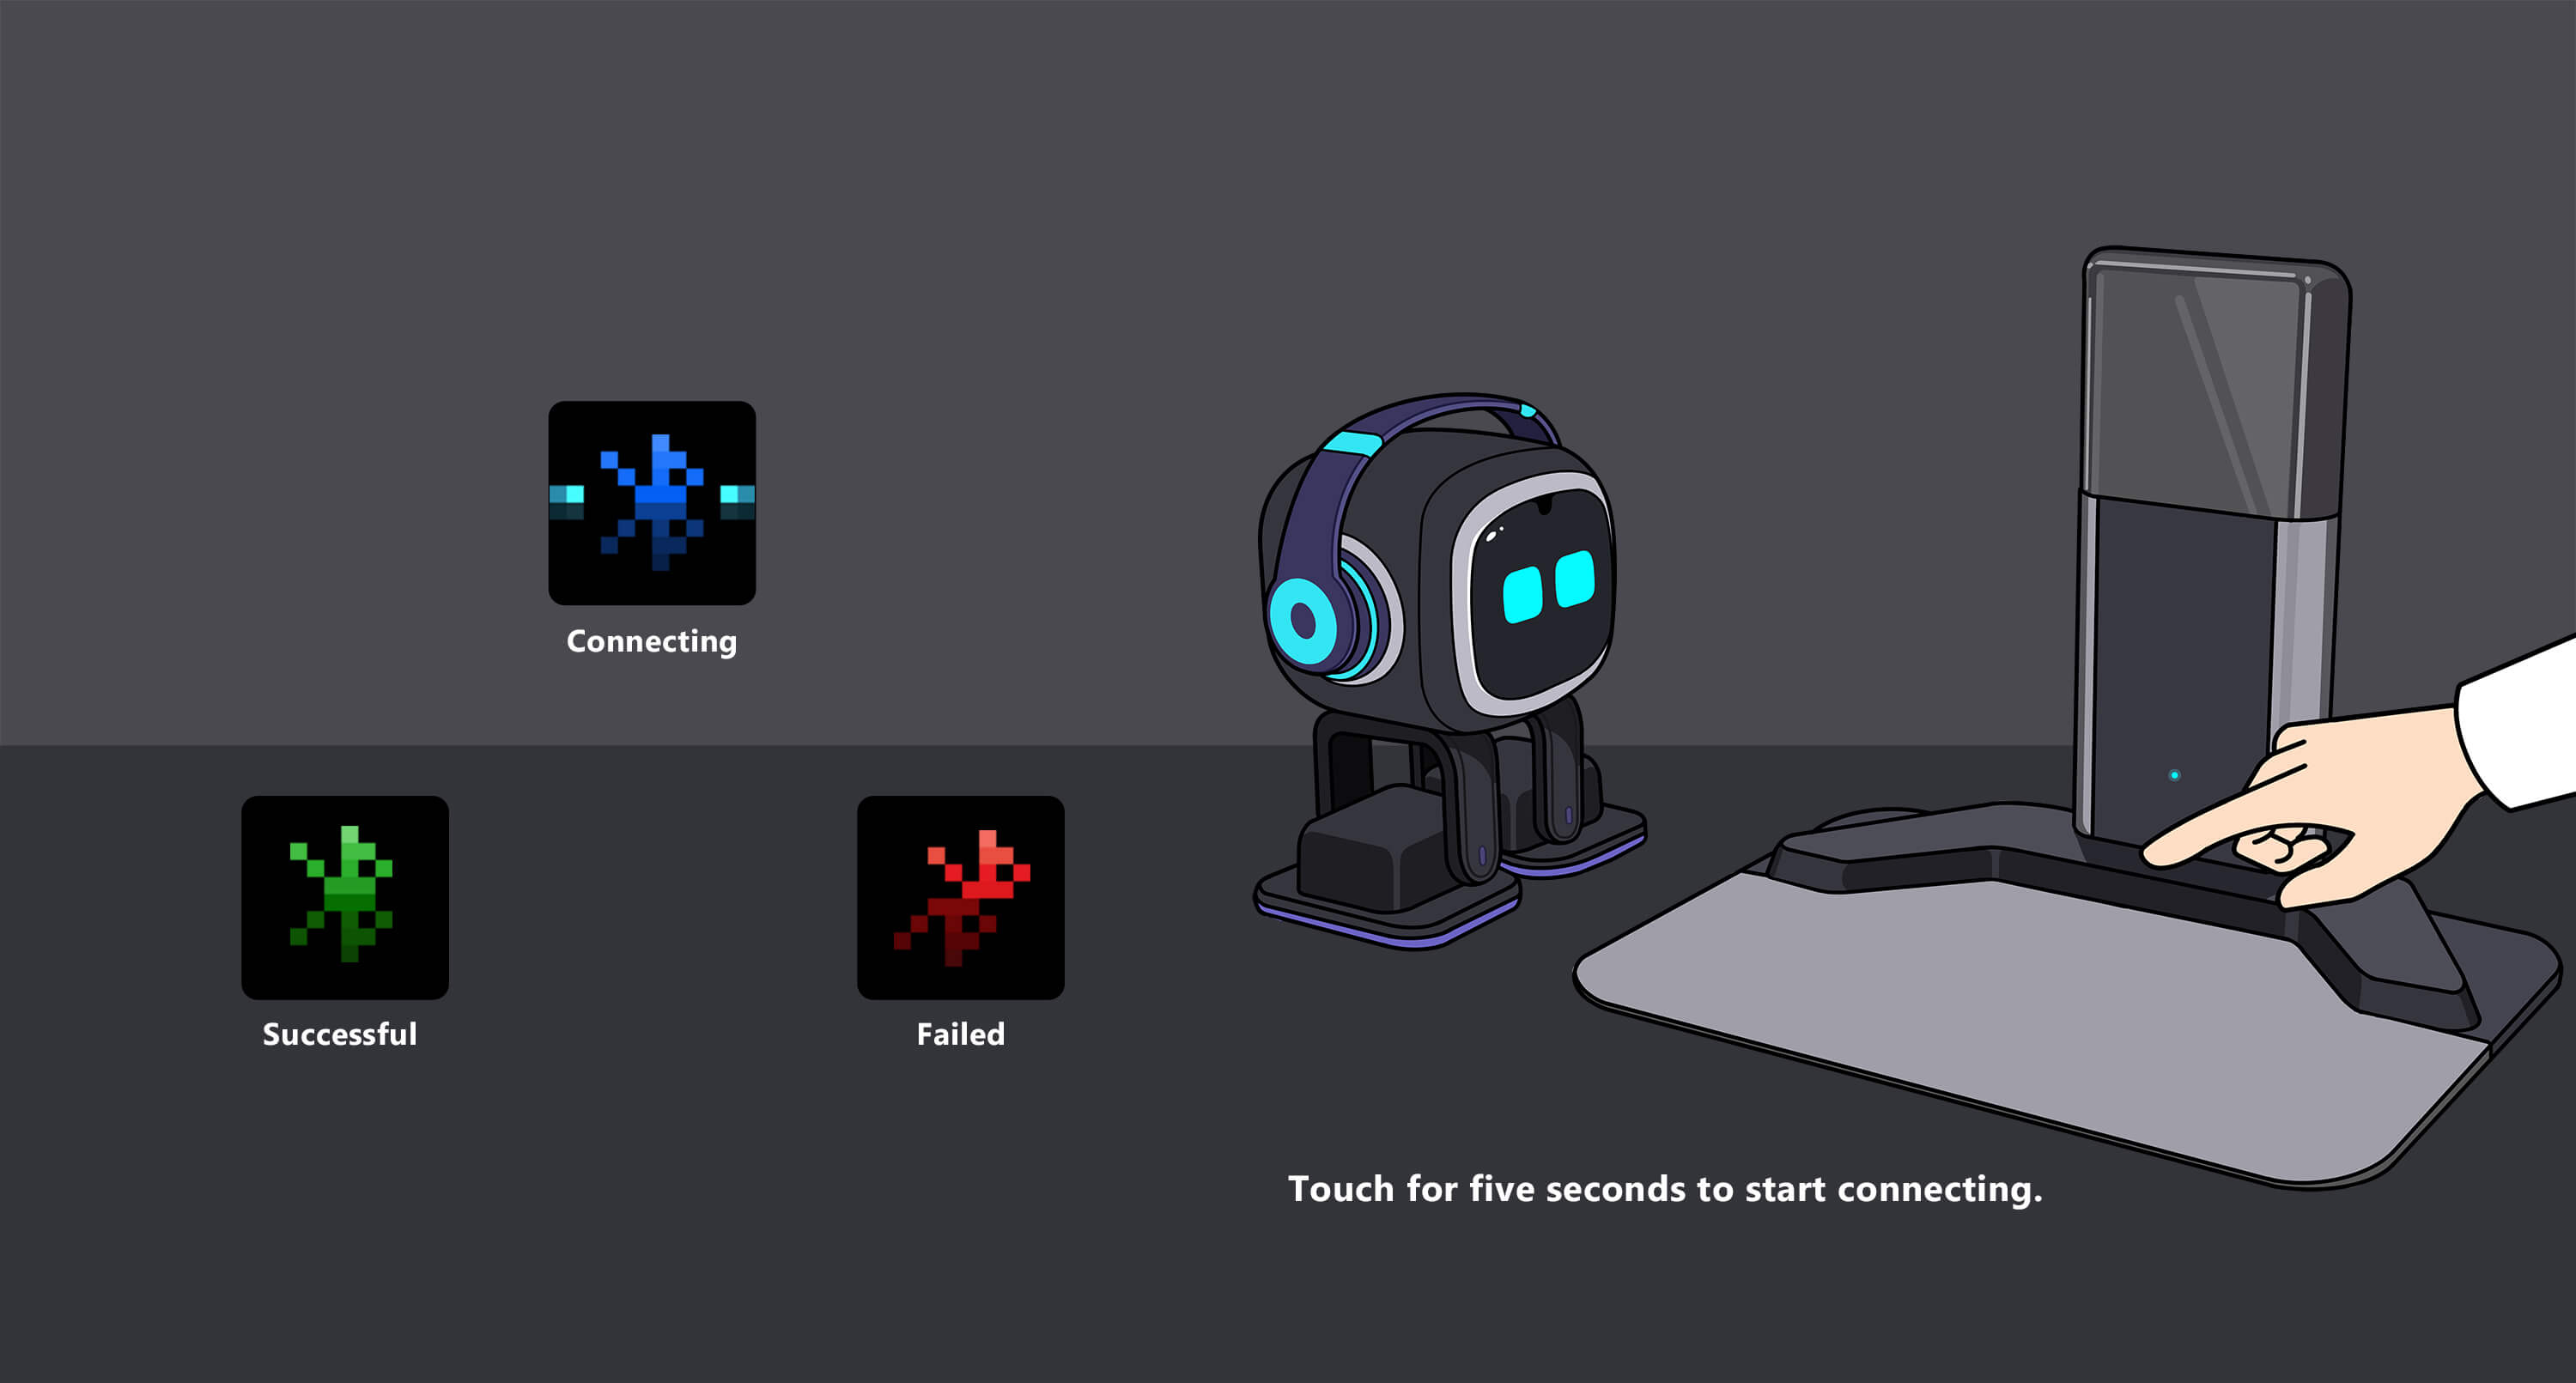 EMO Go Home Robot, AI Desktop Pet with Charging Dock, Living.AI